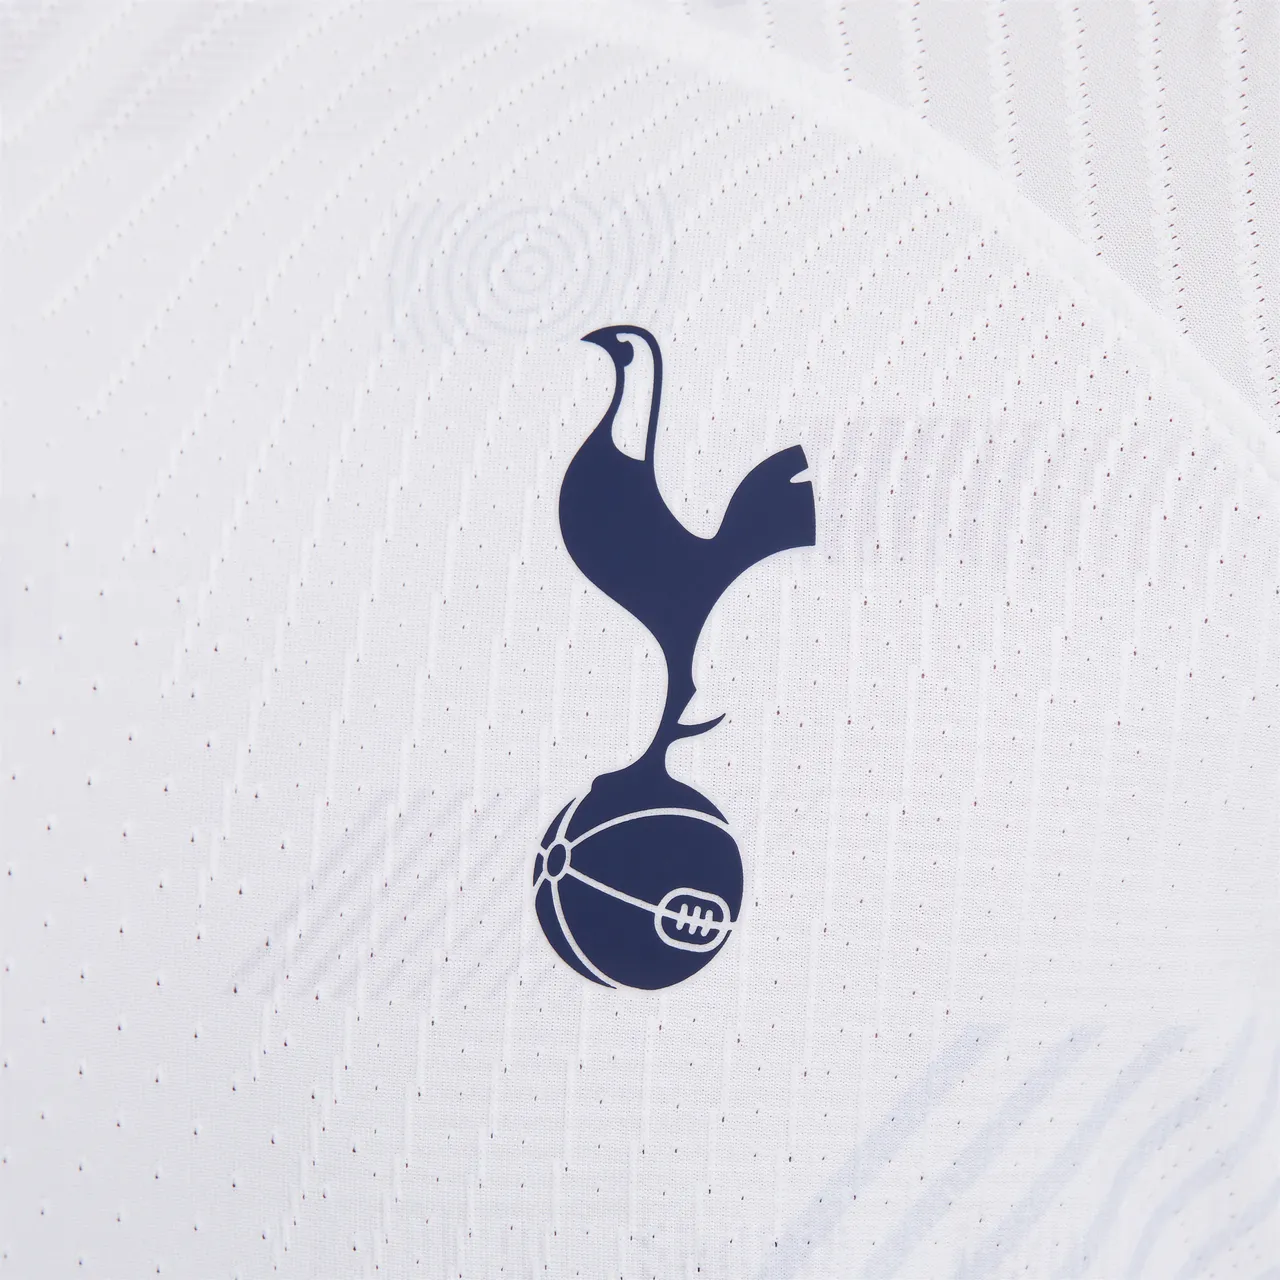 Tottenham Hotspur 2023/24 Match Home Men's Nike Dri-FIT ADV Football Shirt - White - Polyester